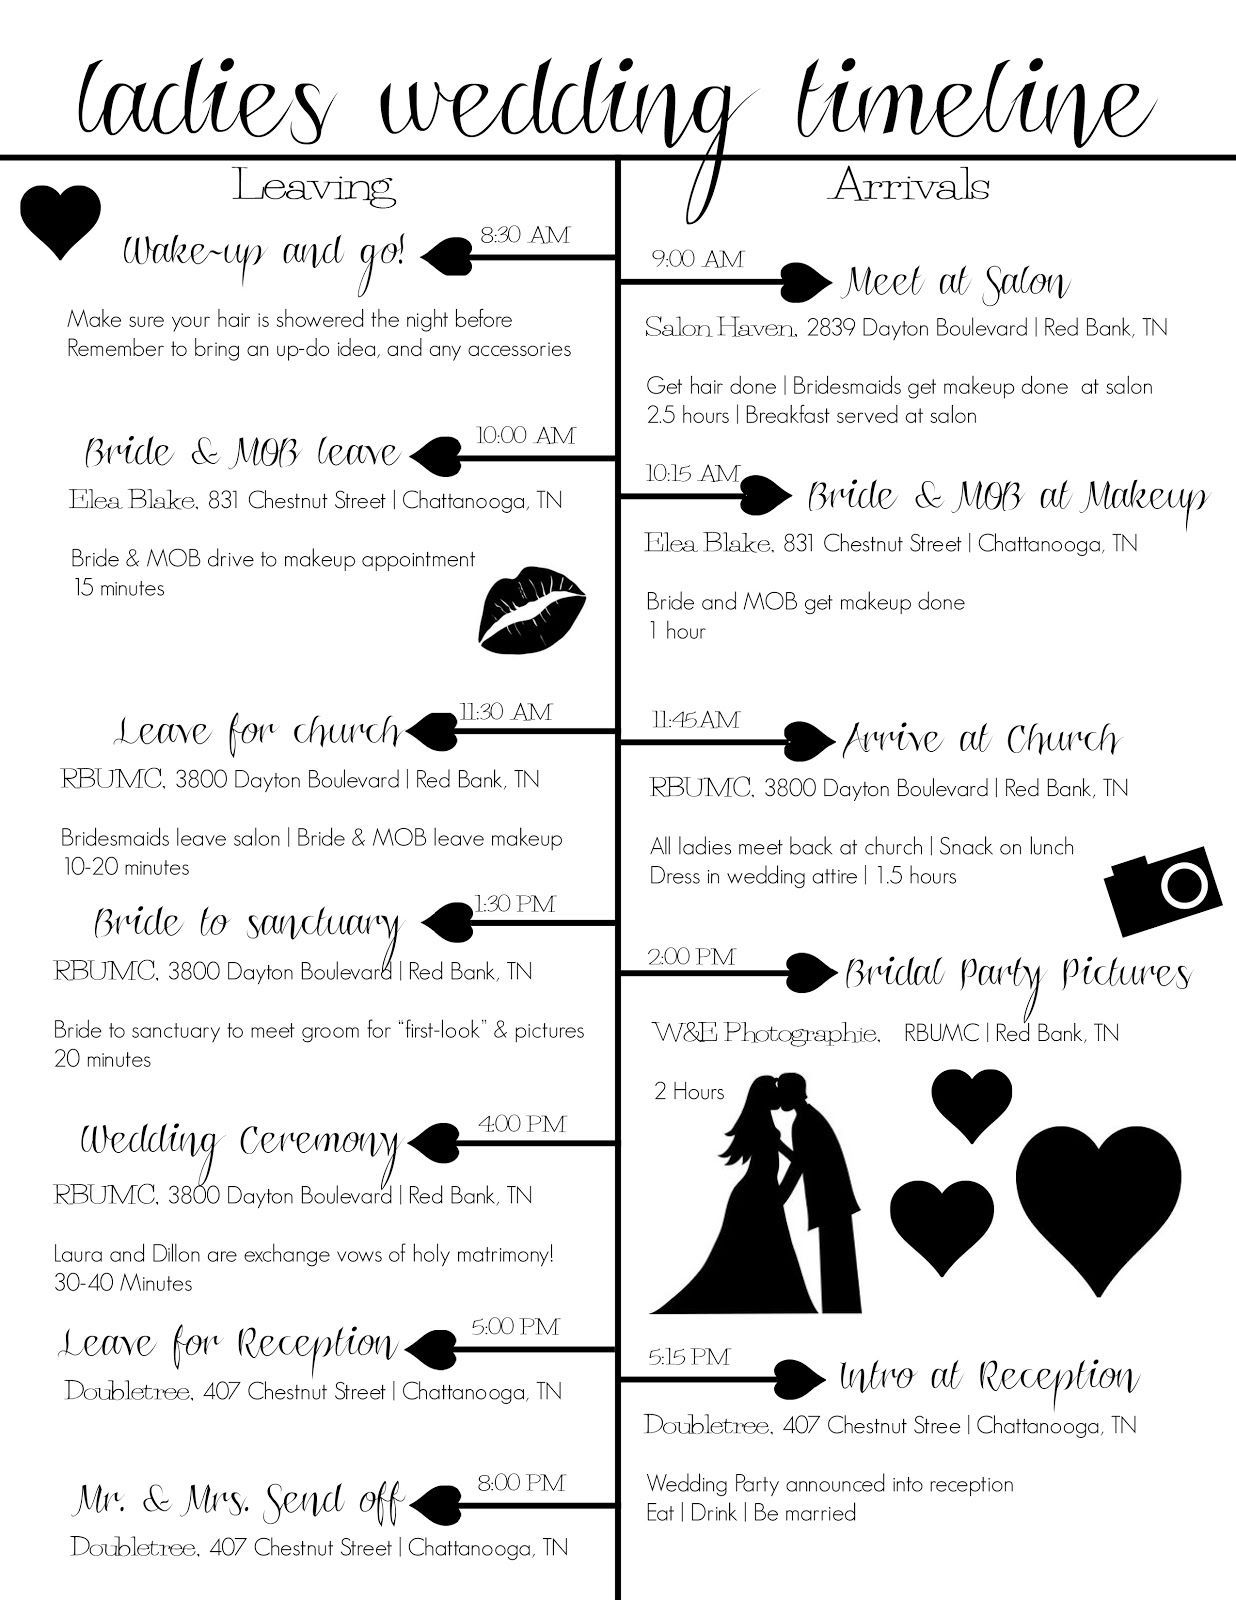 DAY OF Wedding timeline idea